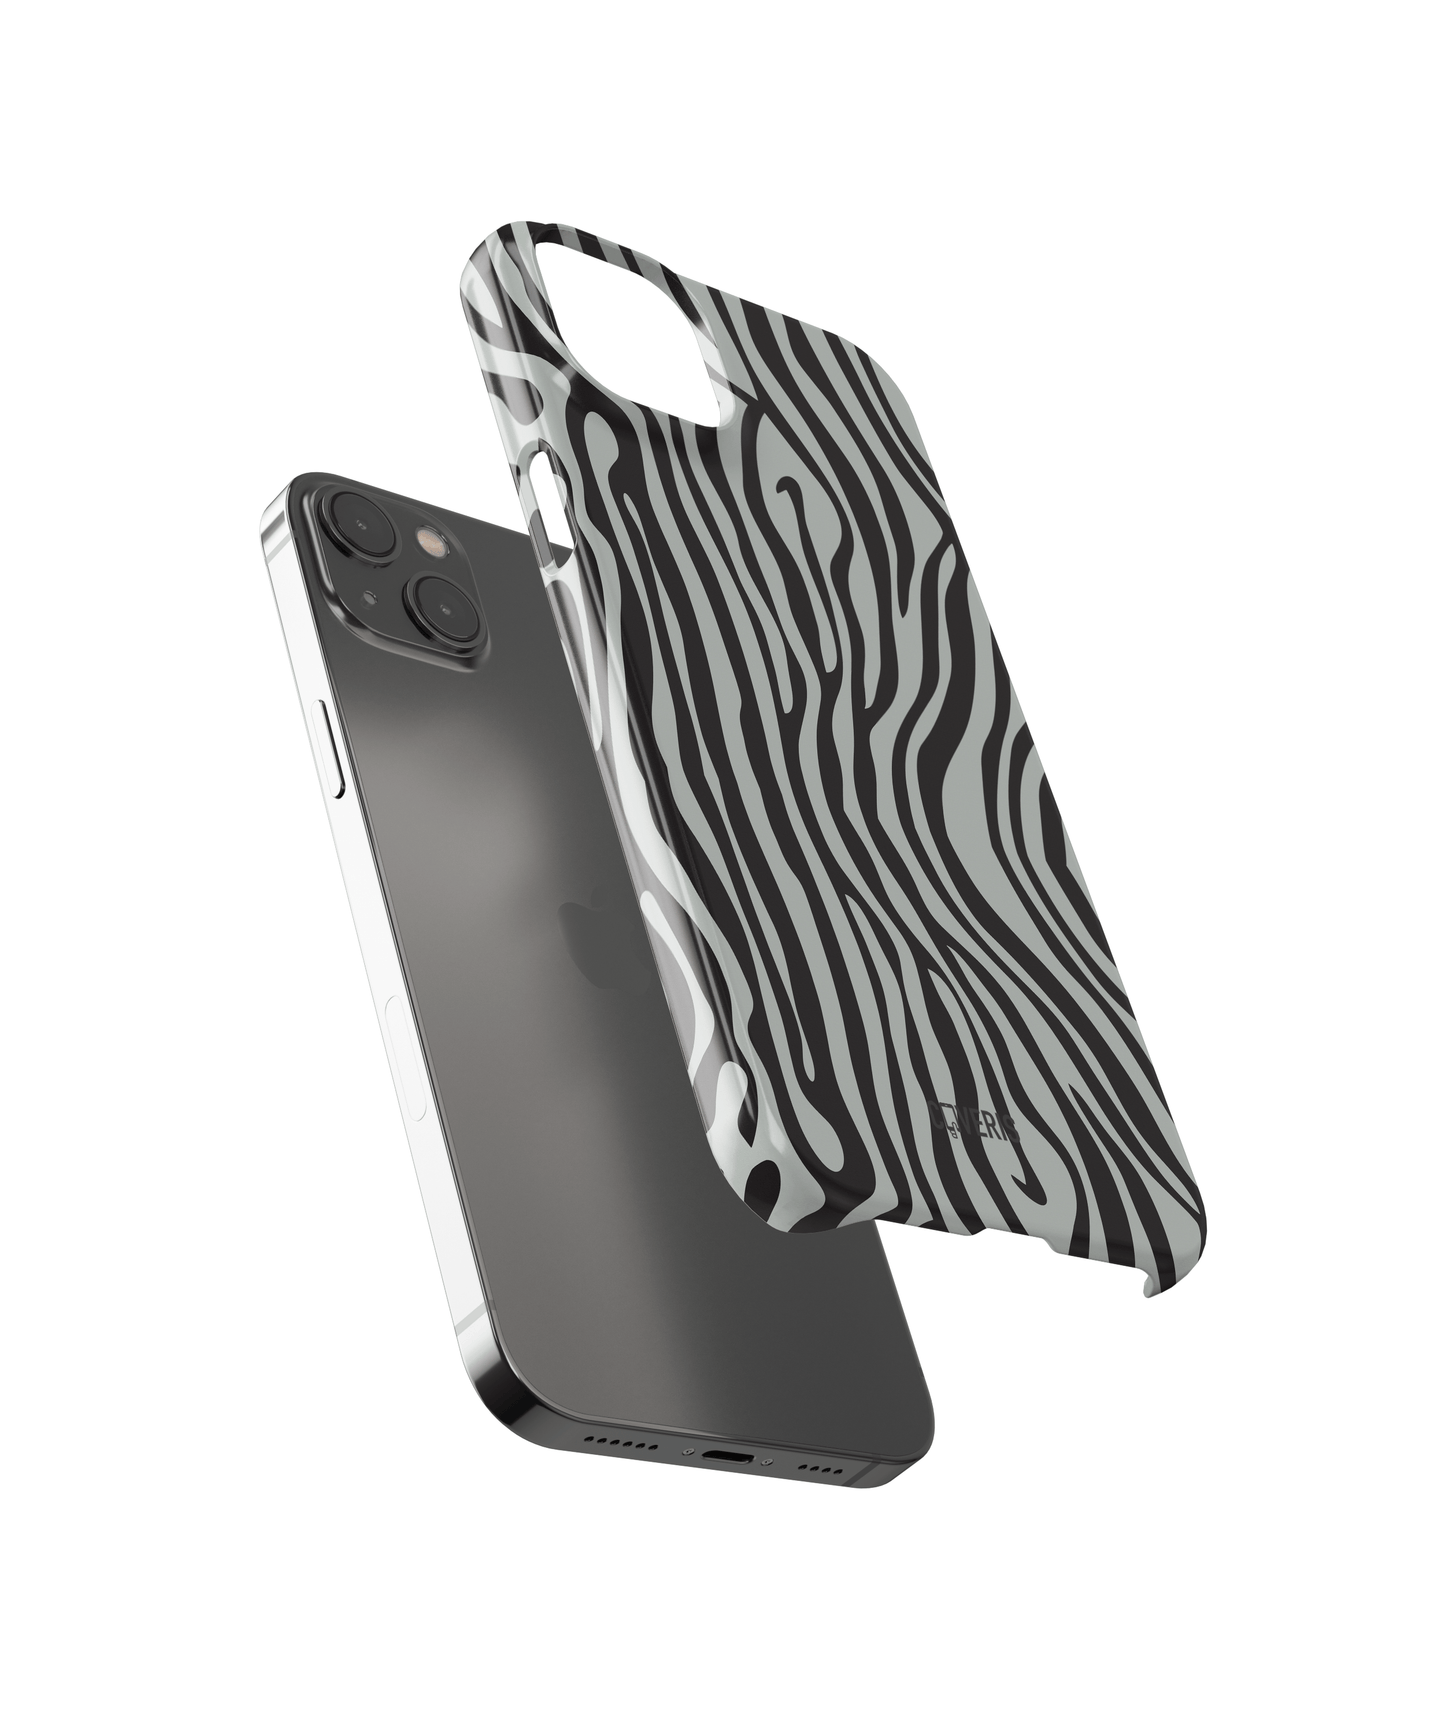 Zebration - Samsung Galaxy S21 plus phone case